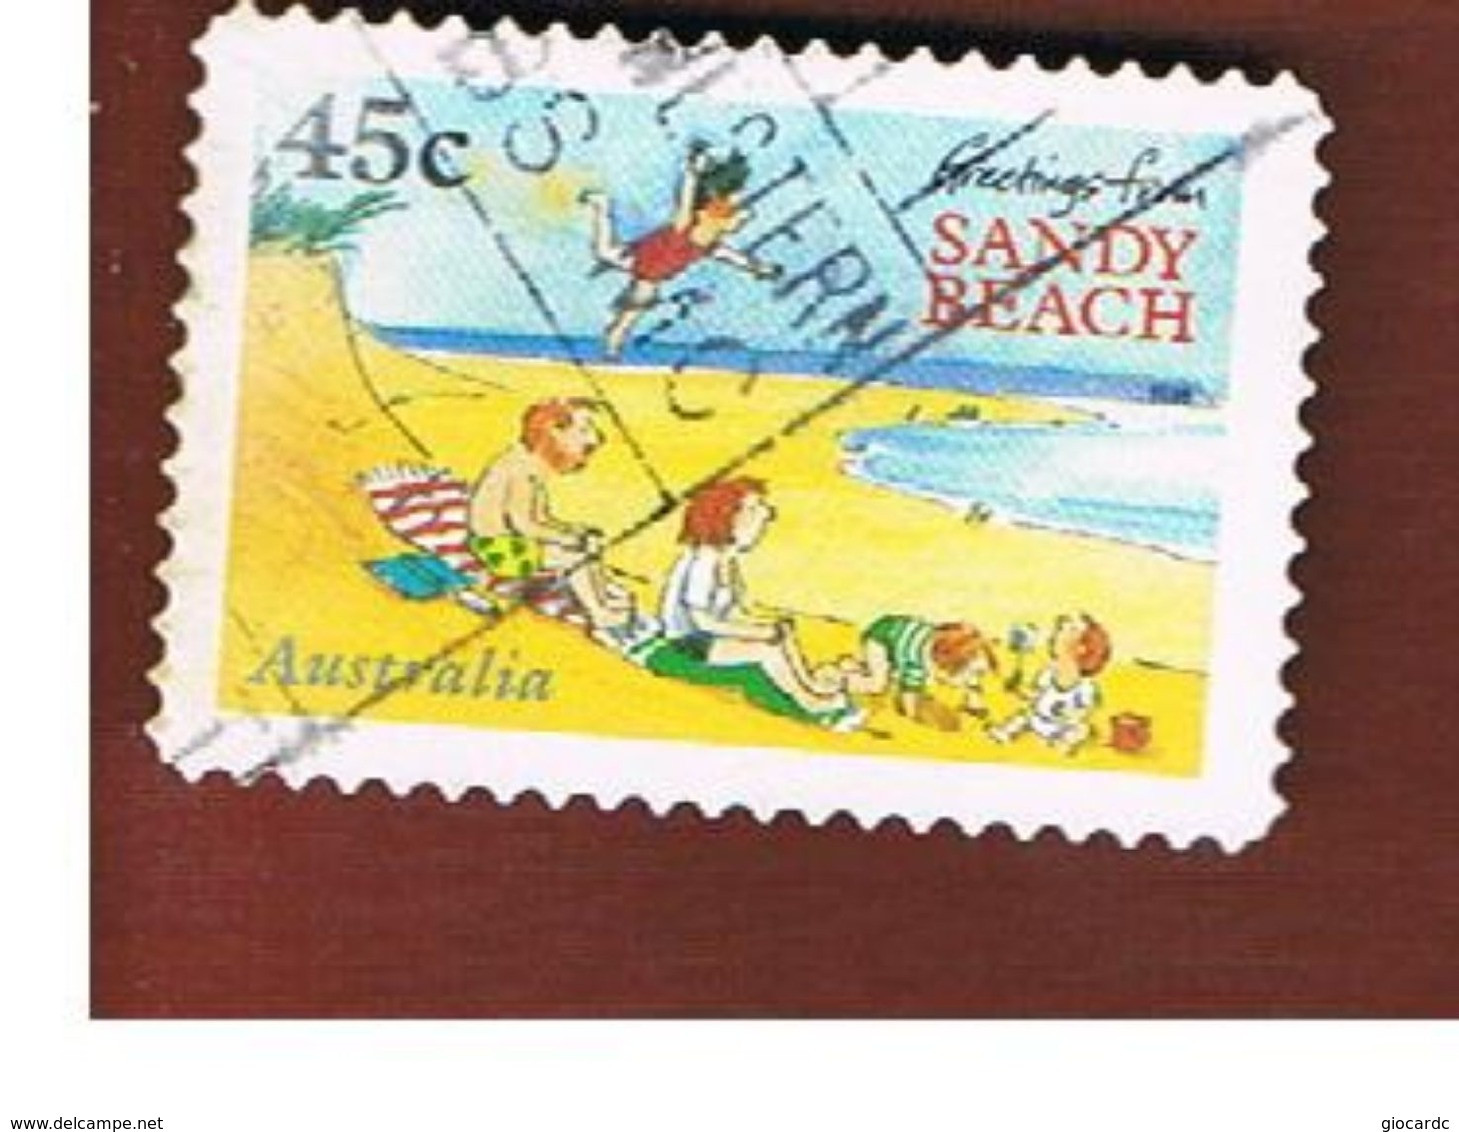 AUSTRALIA  -  SG 1635 -      1996  BOOKS FOR CHILDREN: SANDY BEACH         -       USED - Gebraucht